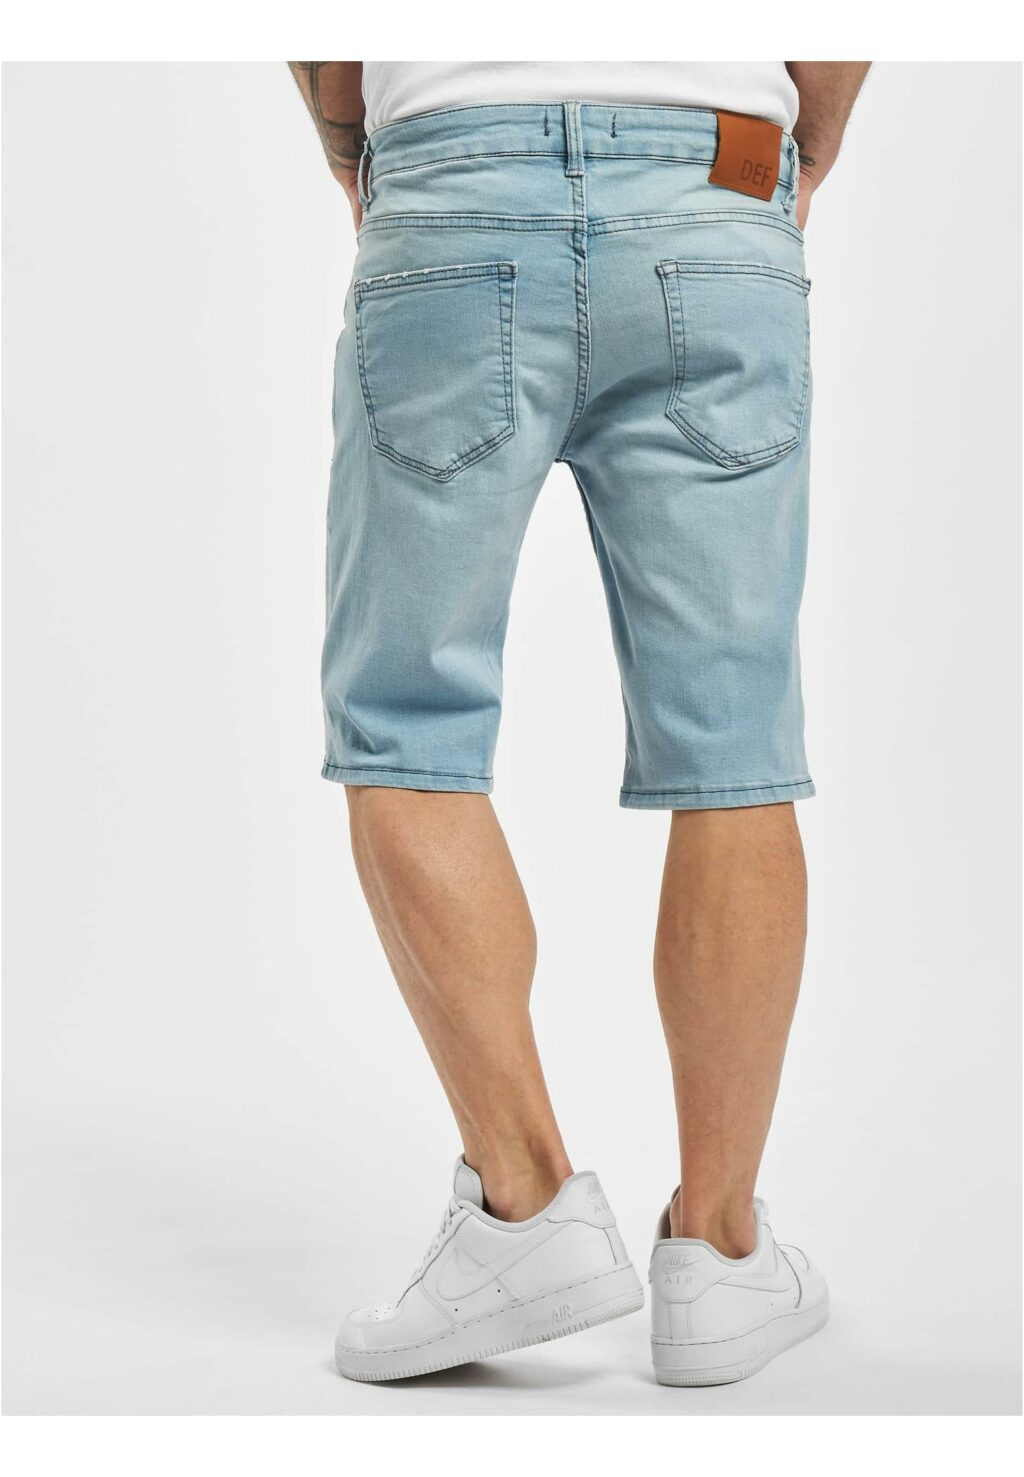 Jeans Shorts Archer Denim light blue denim DFSH026